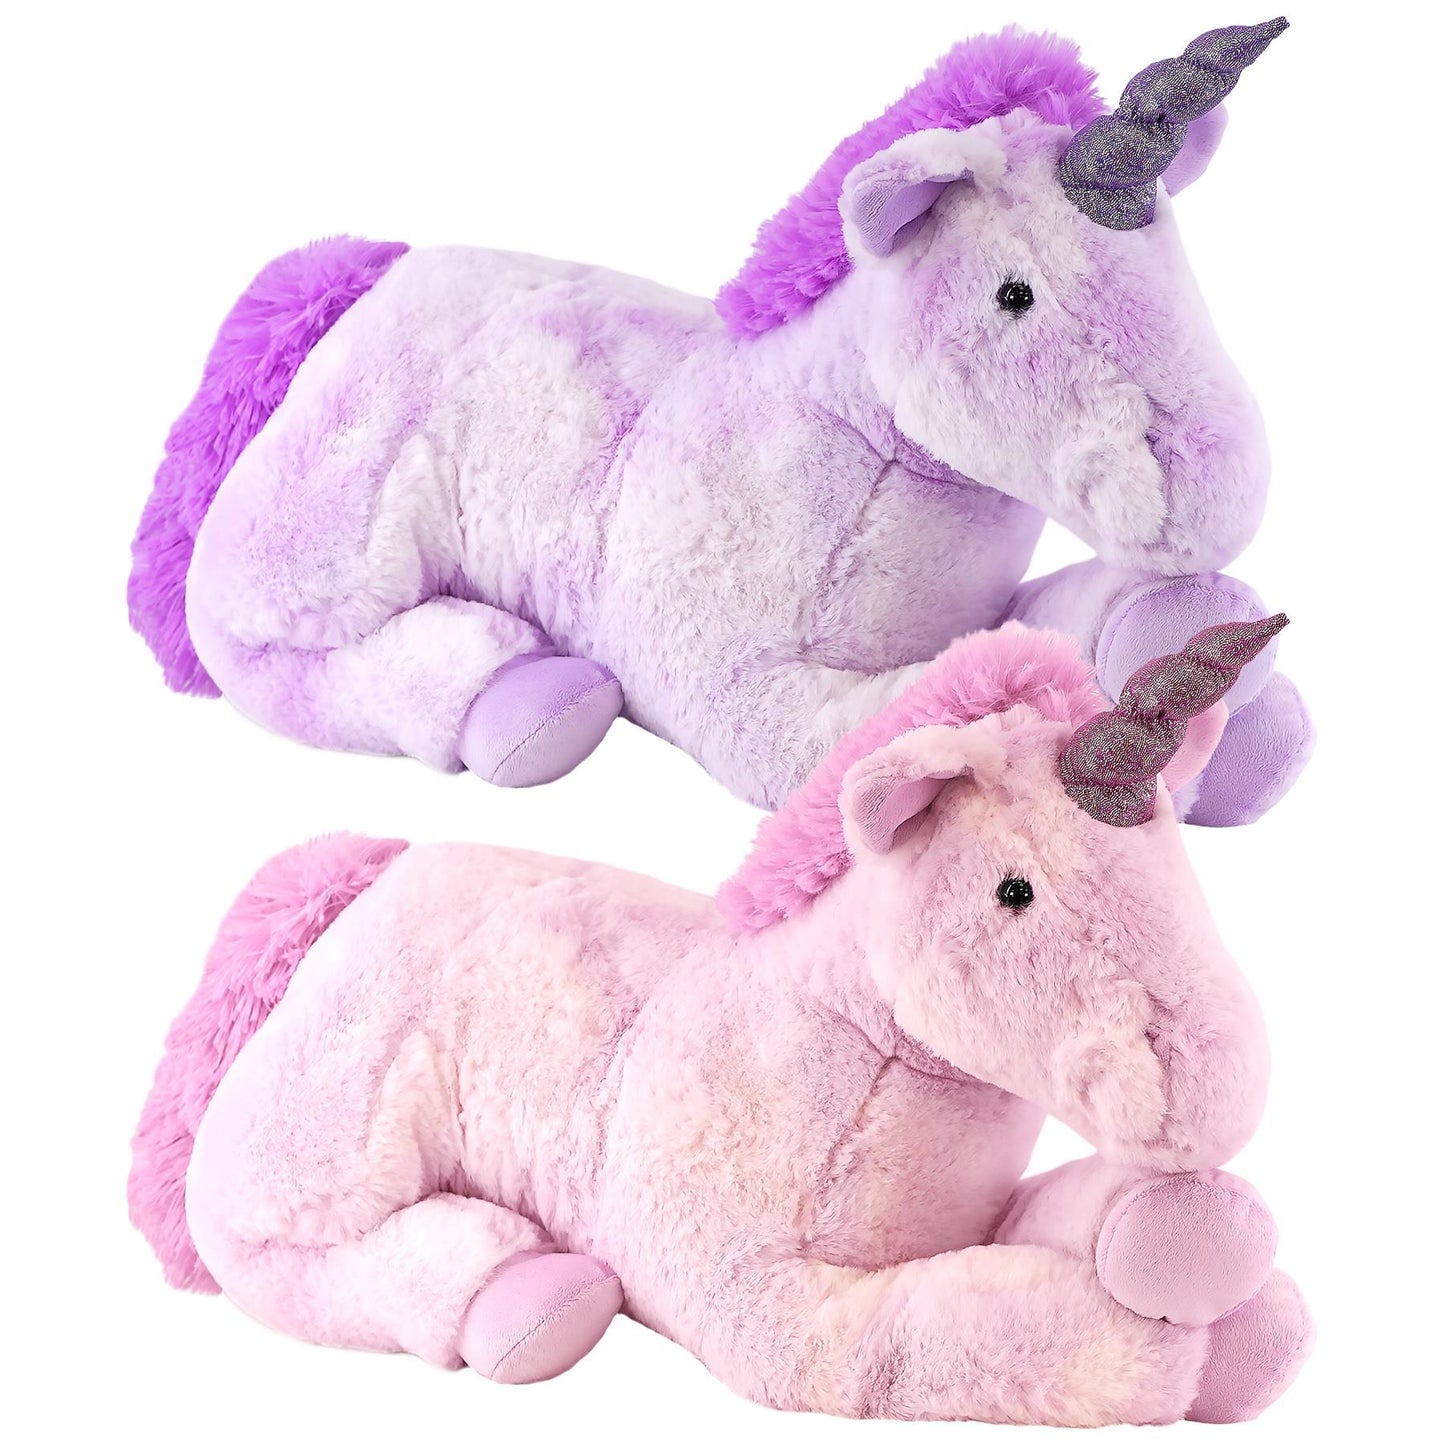 21" Lying Soft Stuffed Unicorn by The Magic Toy Shop - UKBuyZone